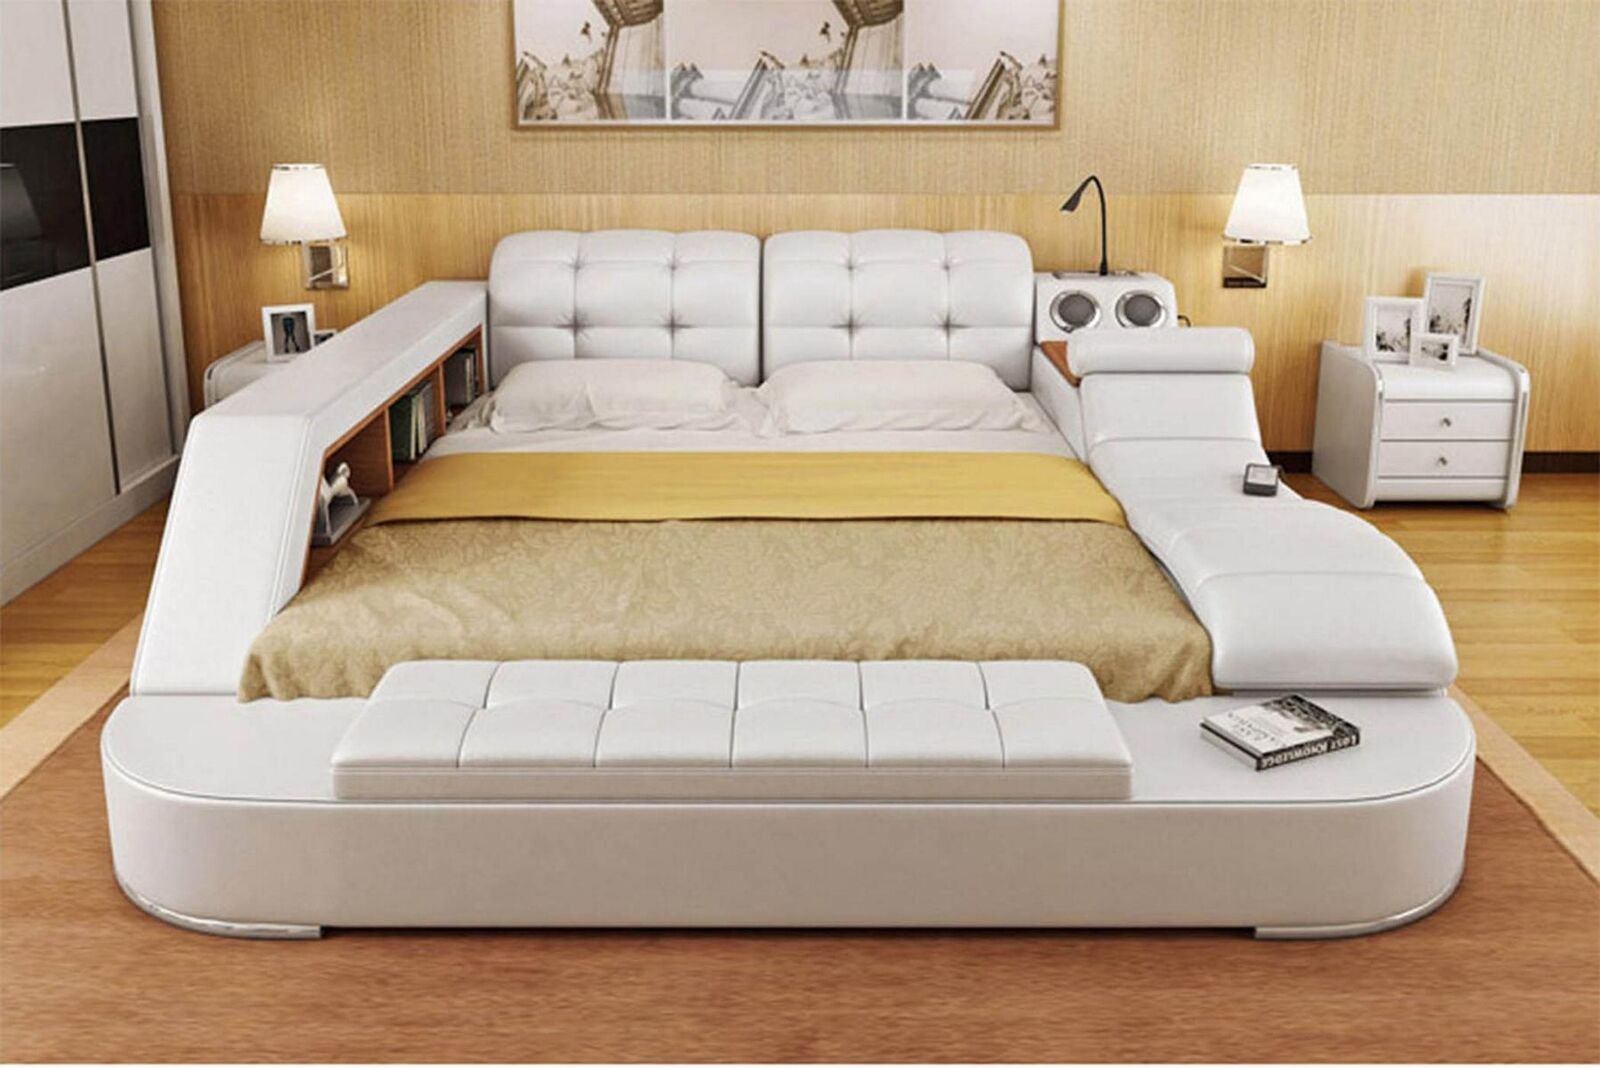 Chesterfield Doppel Luxus Design Bett 180x200 Multifunktionsbett Neu